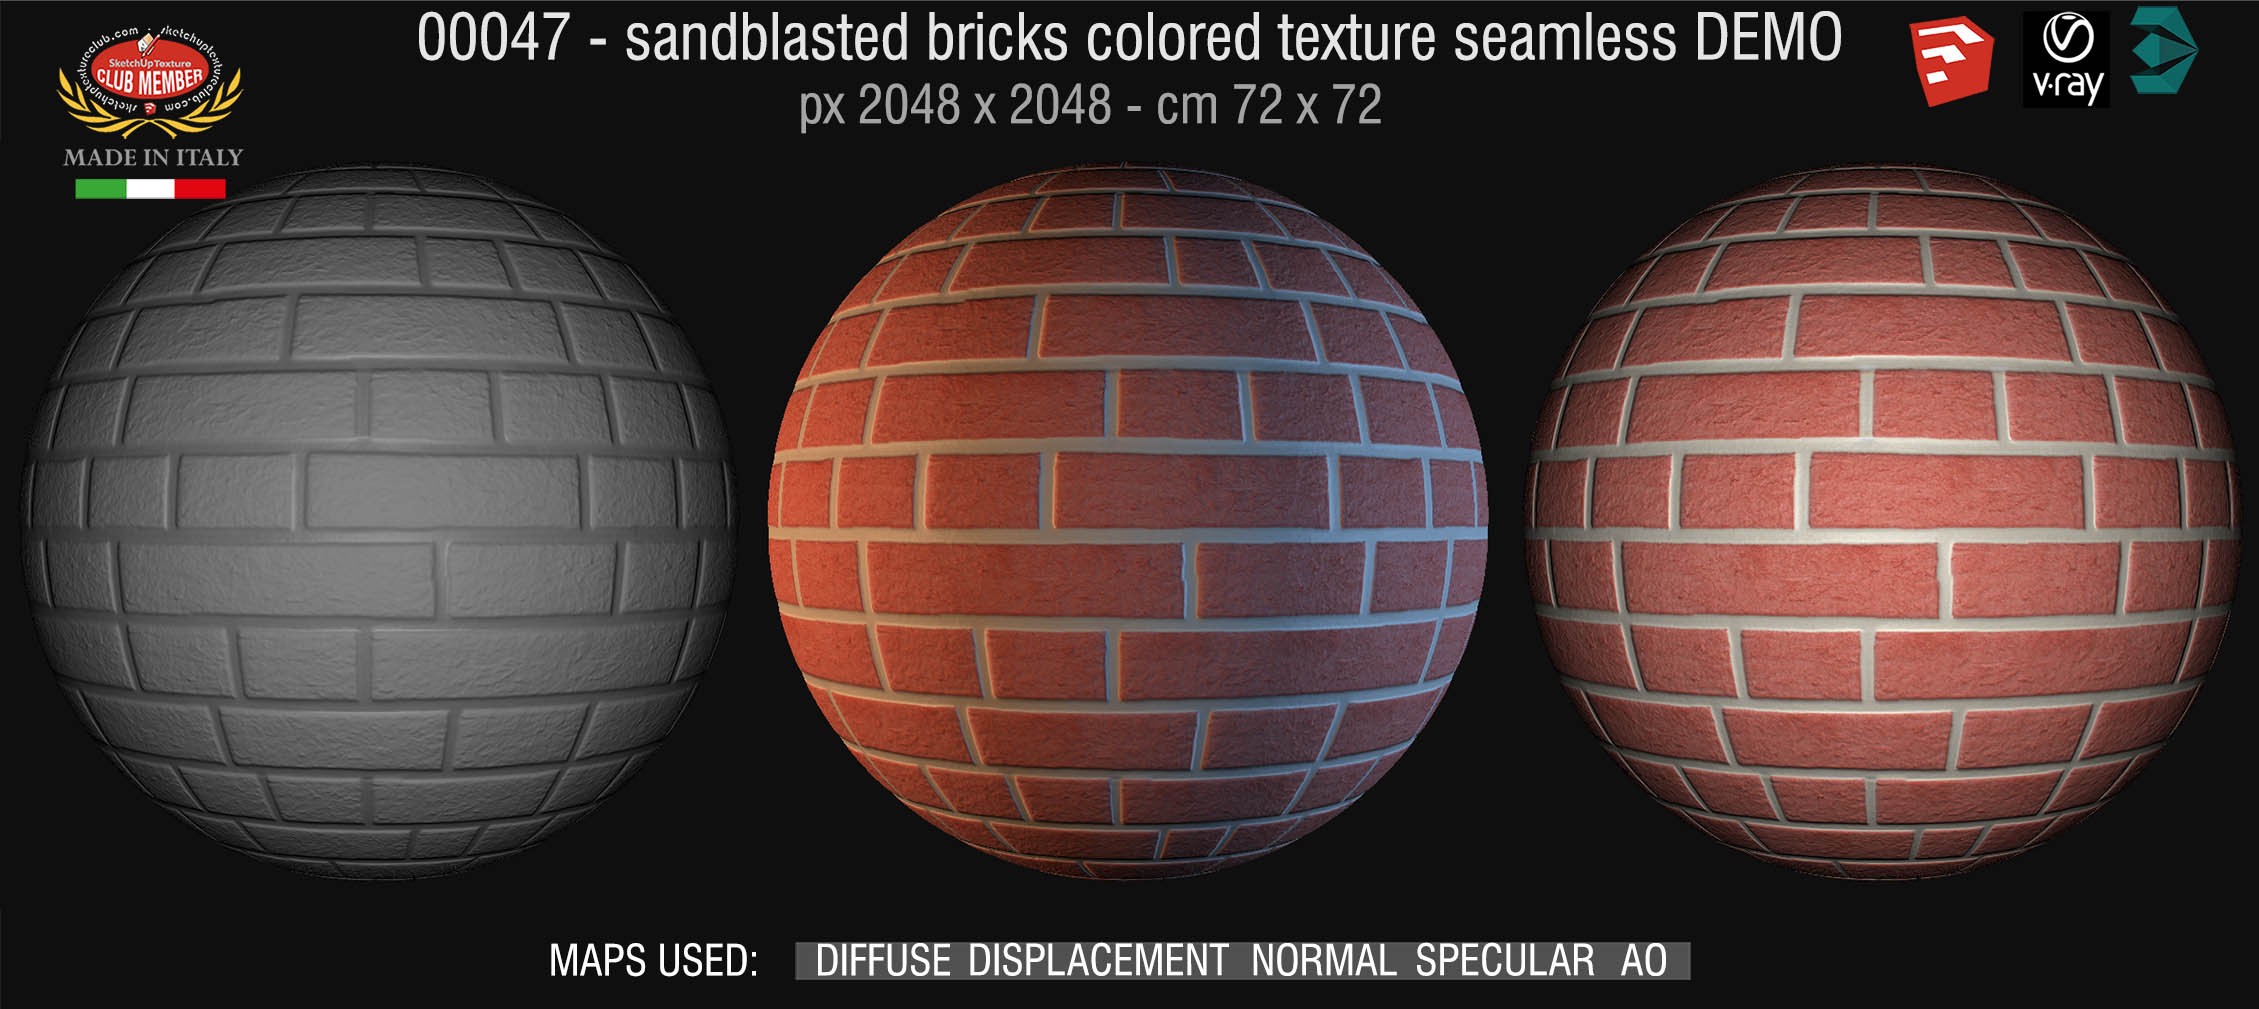 00047 Sandblasted bricks colored texture seamless + maps DEMO